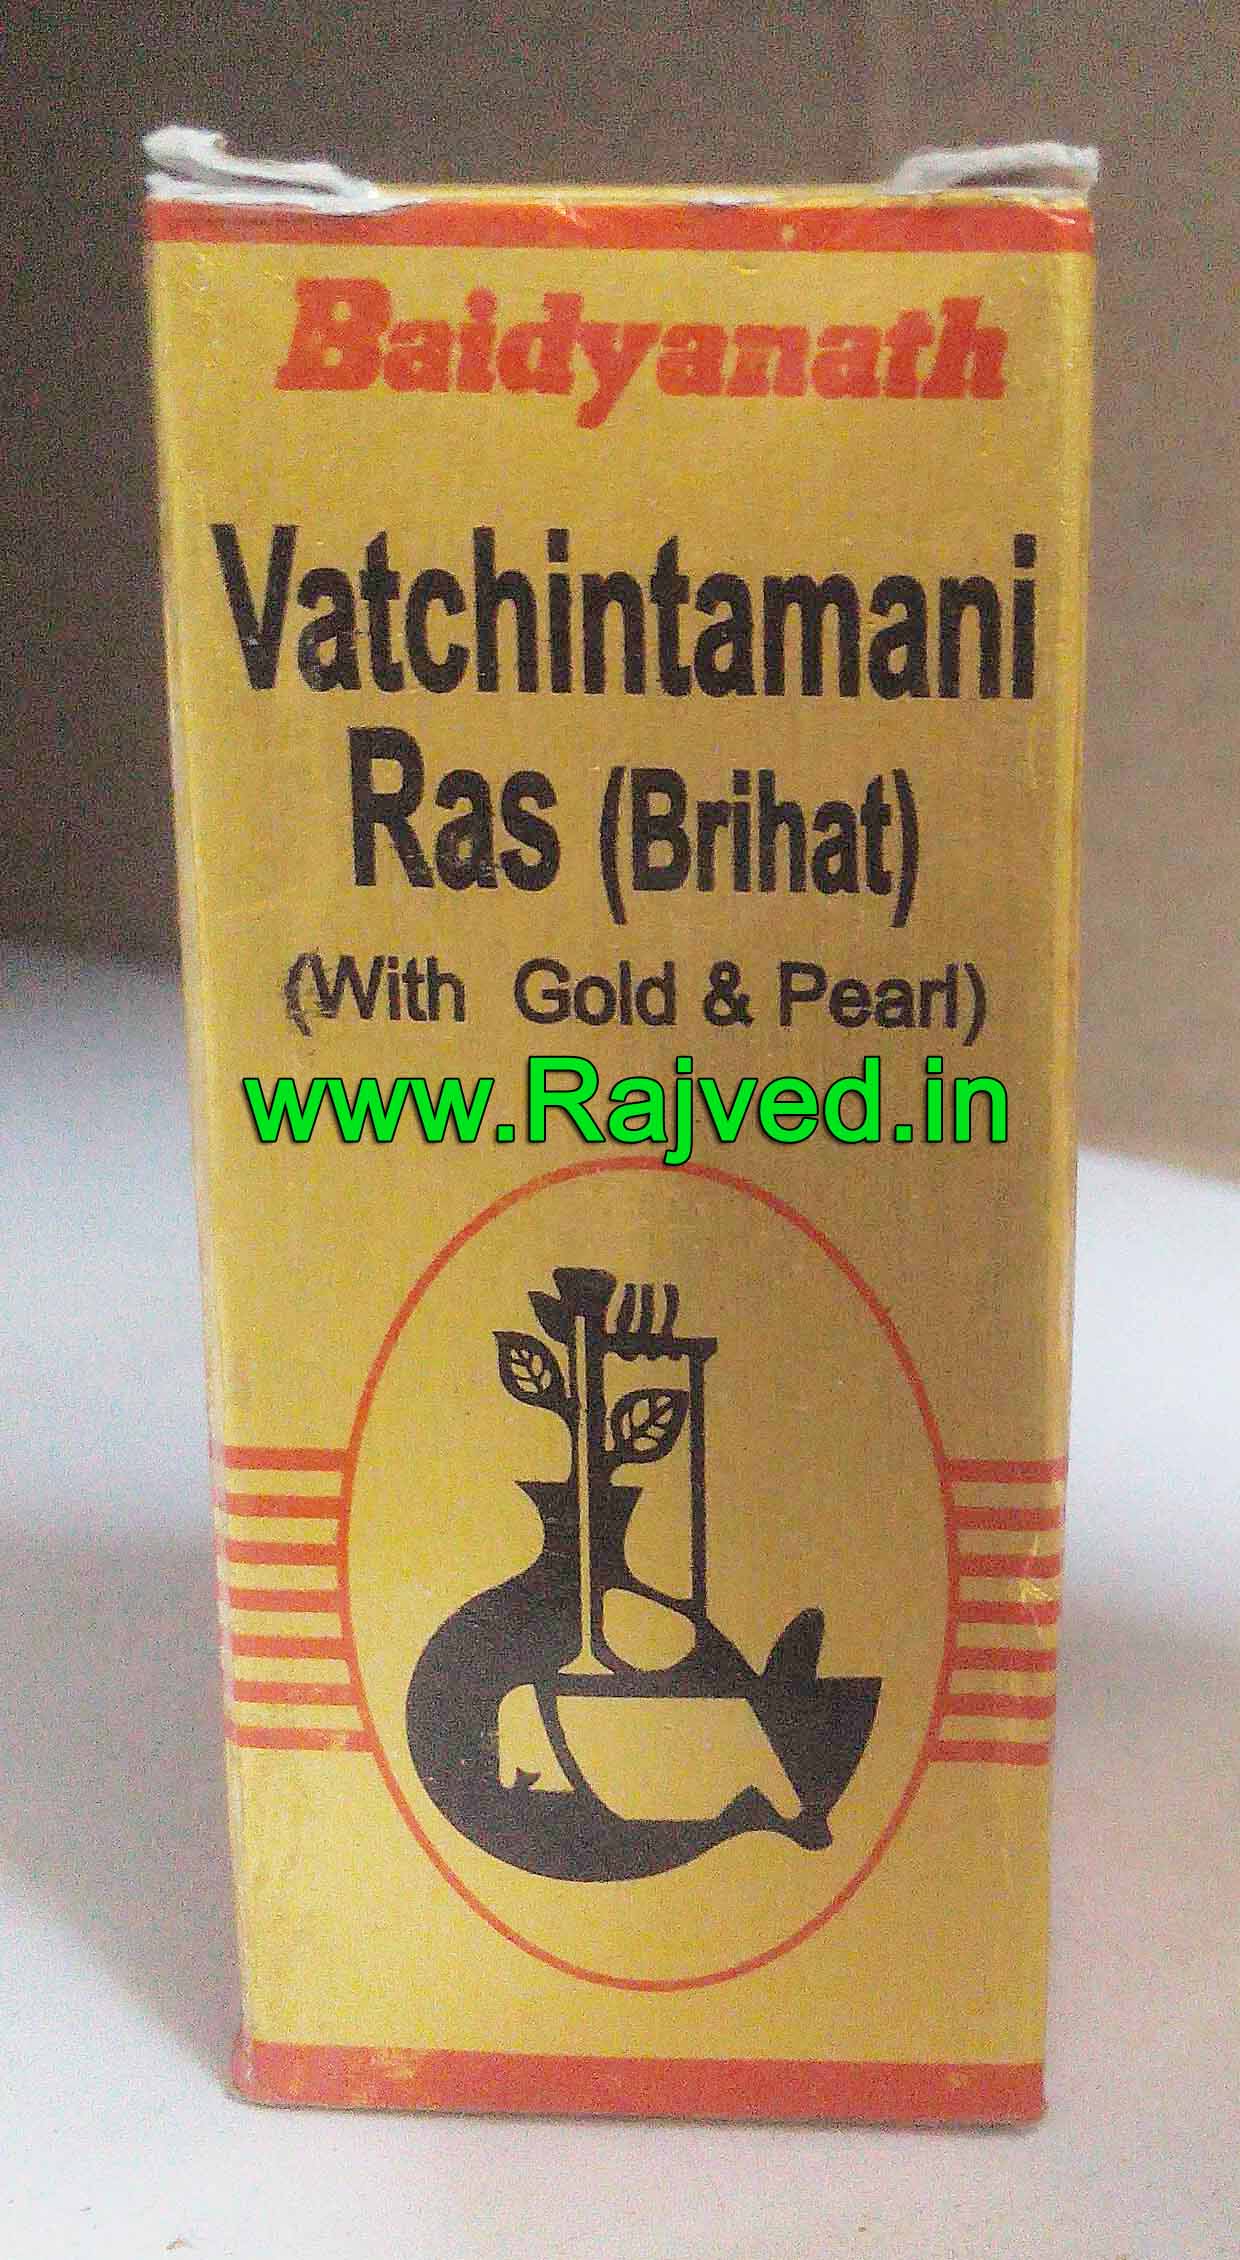 brihat vatchintamani ras with gold 60tab upto 20% off free shipping shree baidyanath ayurved bhavan